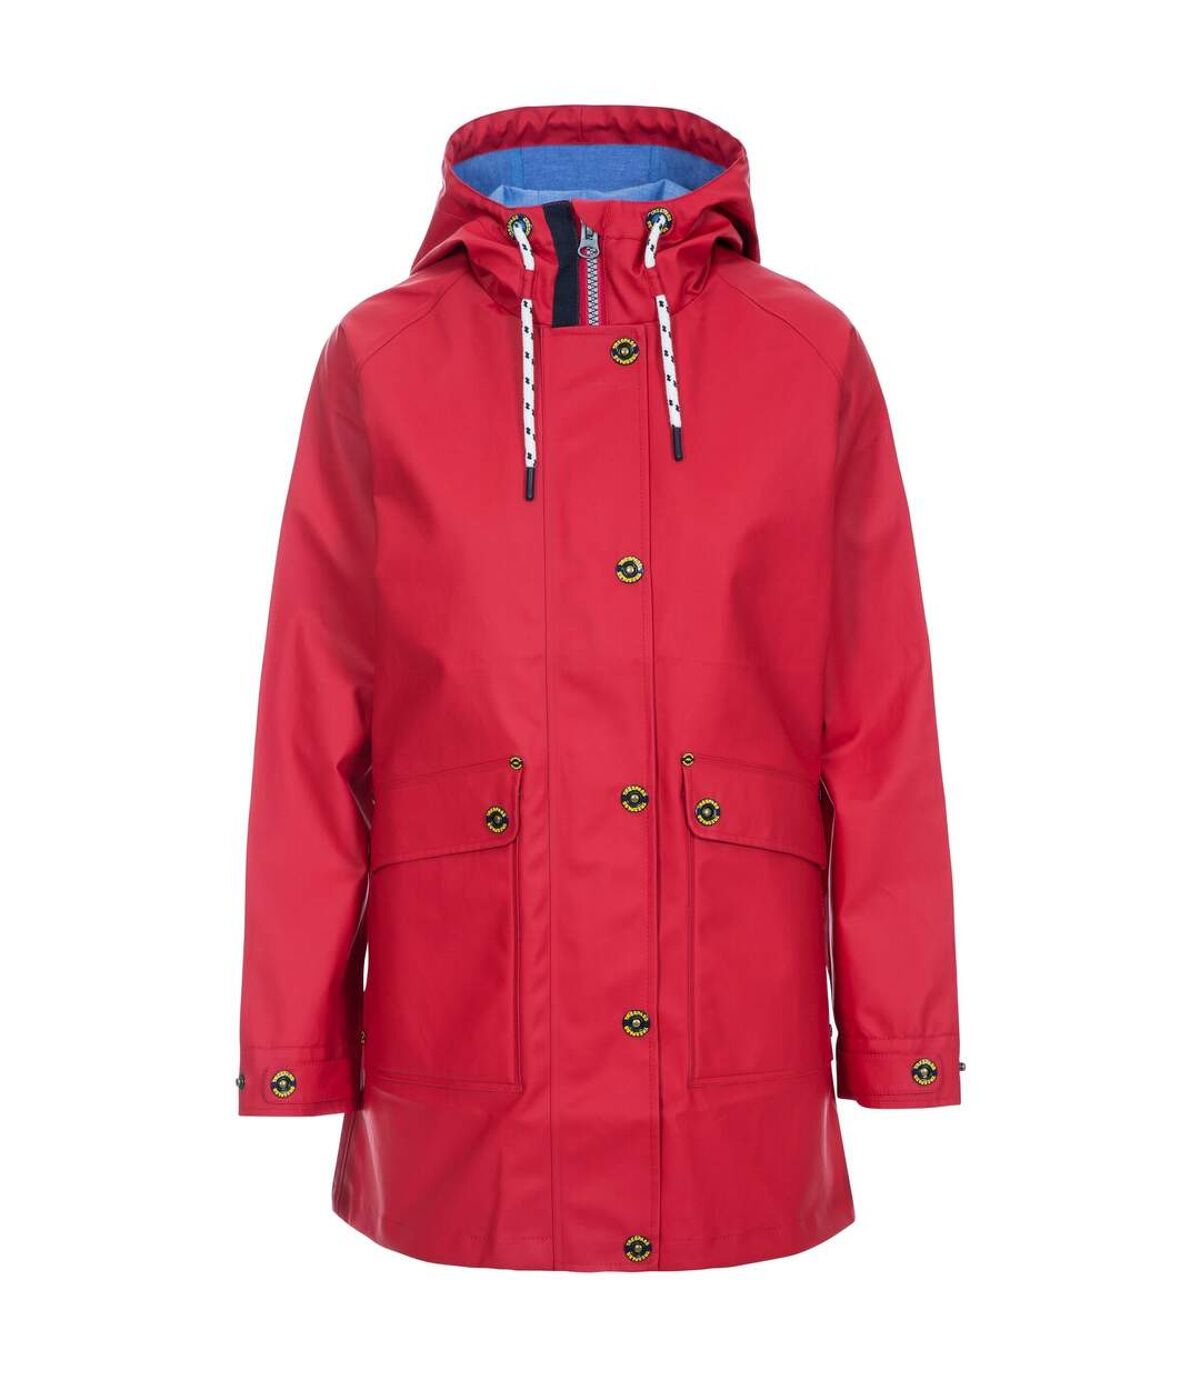 Trespass Womens/Ladies Shoreline Rain Jacket (Red)